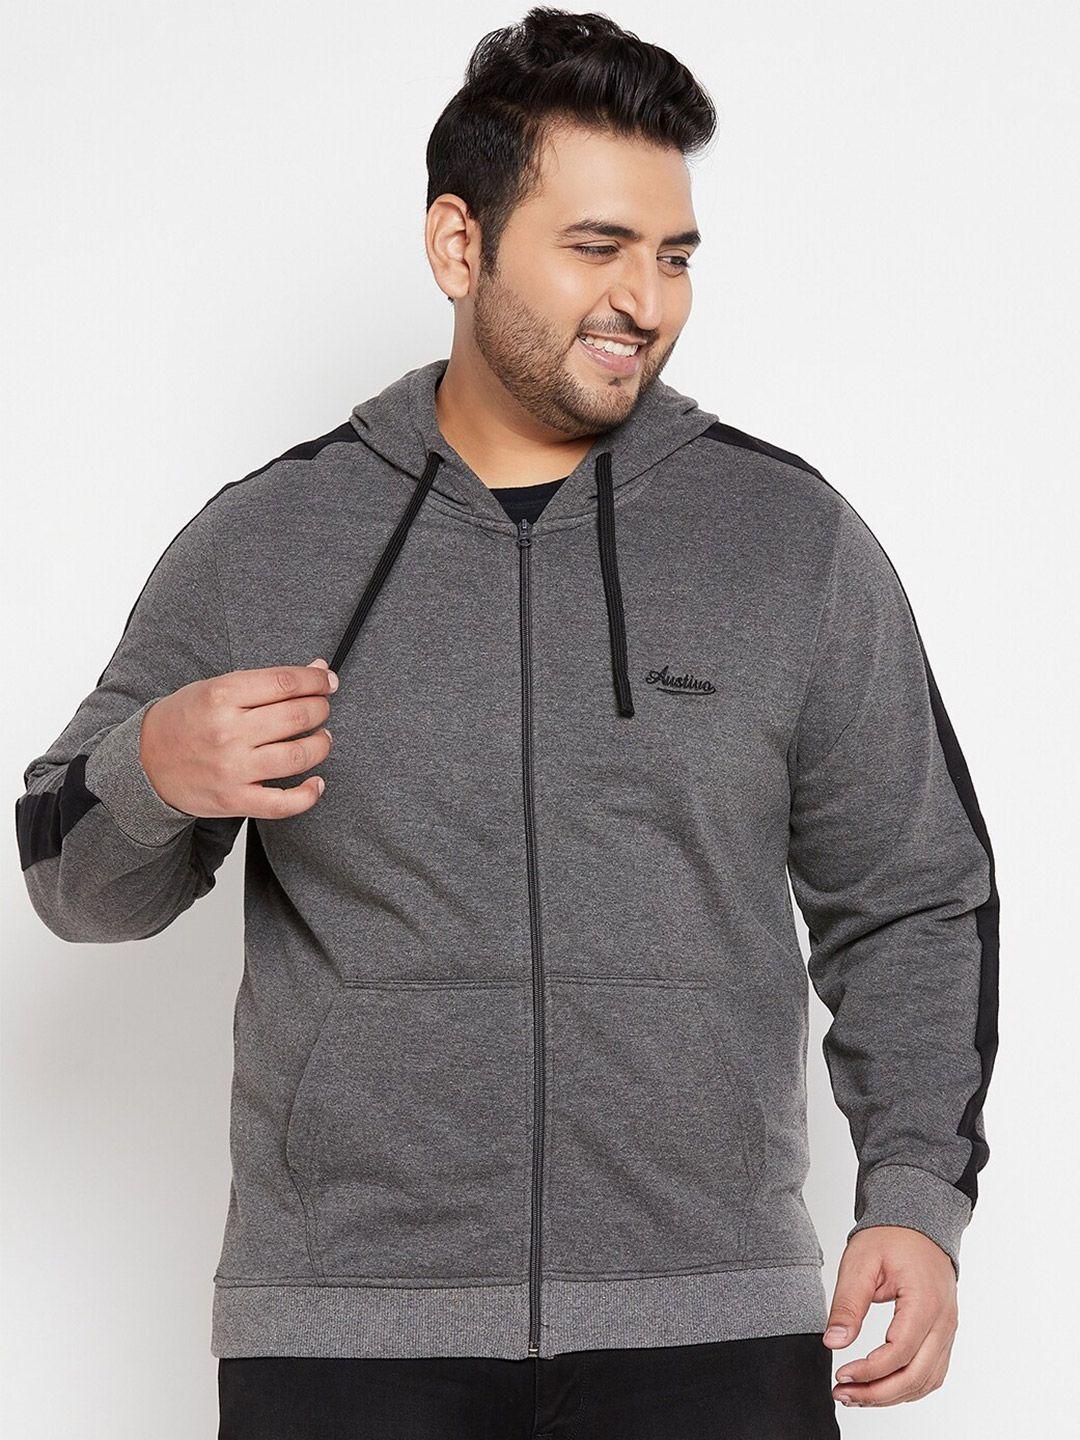 austivo-front-open-hooded-sweatshirt